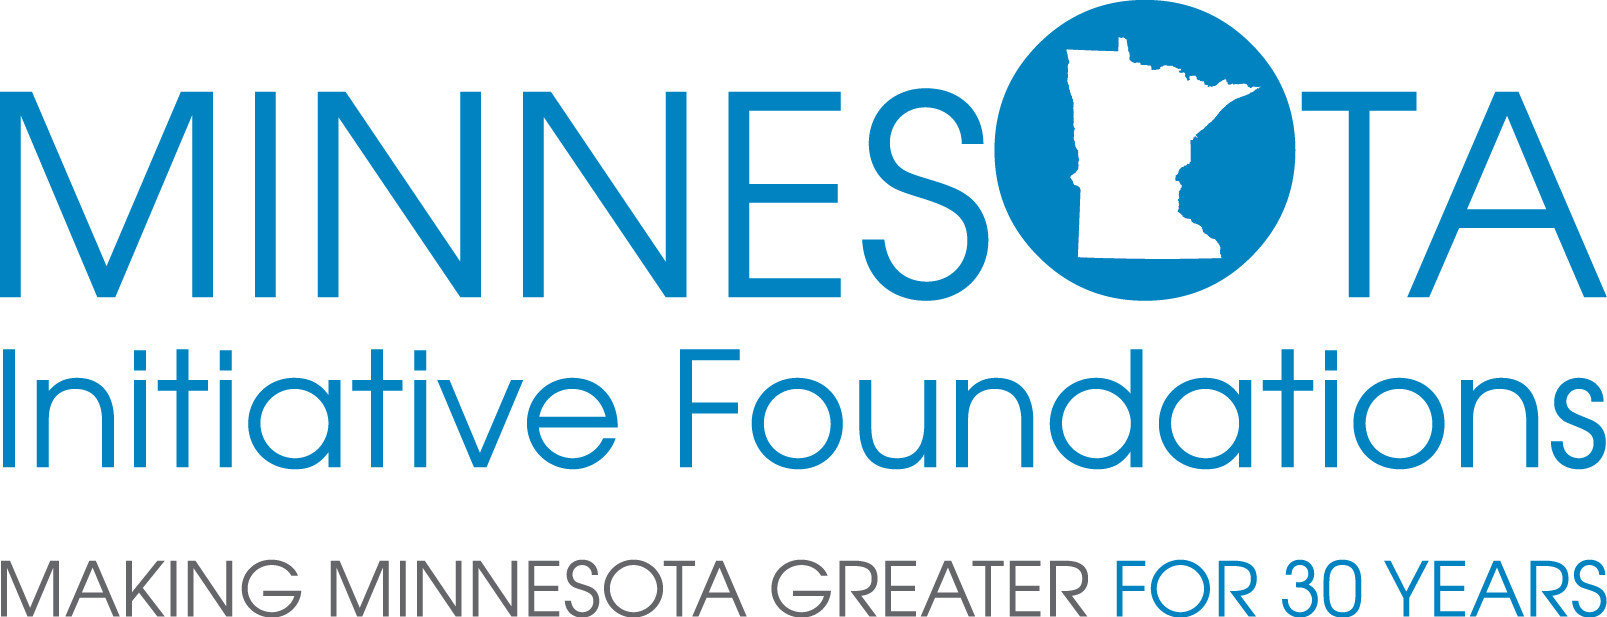 Minnesota Initiative Foundation logo